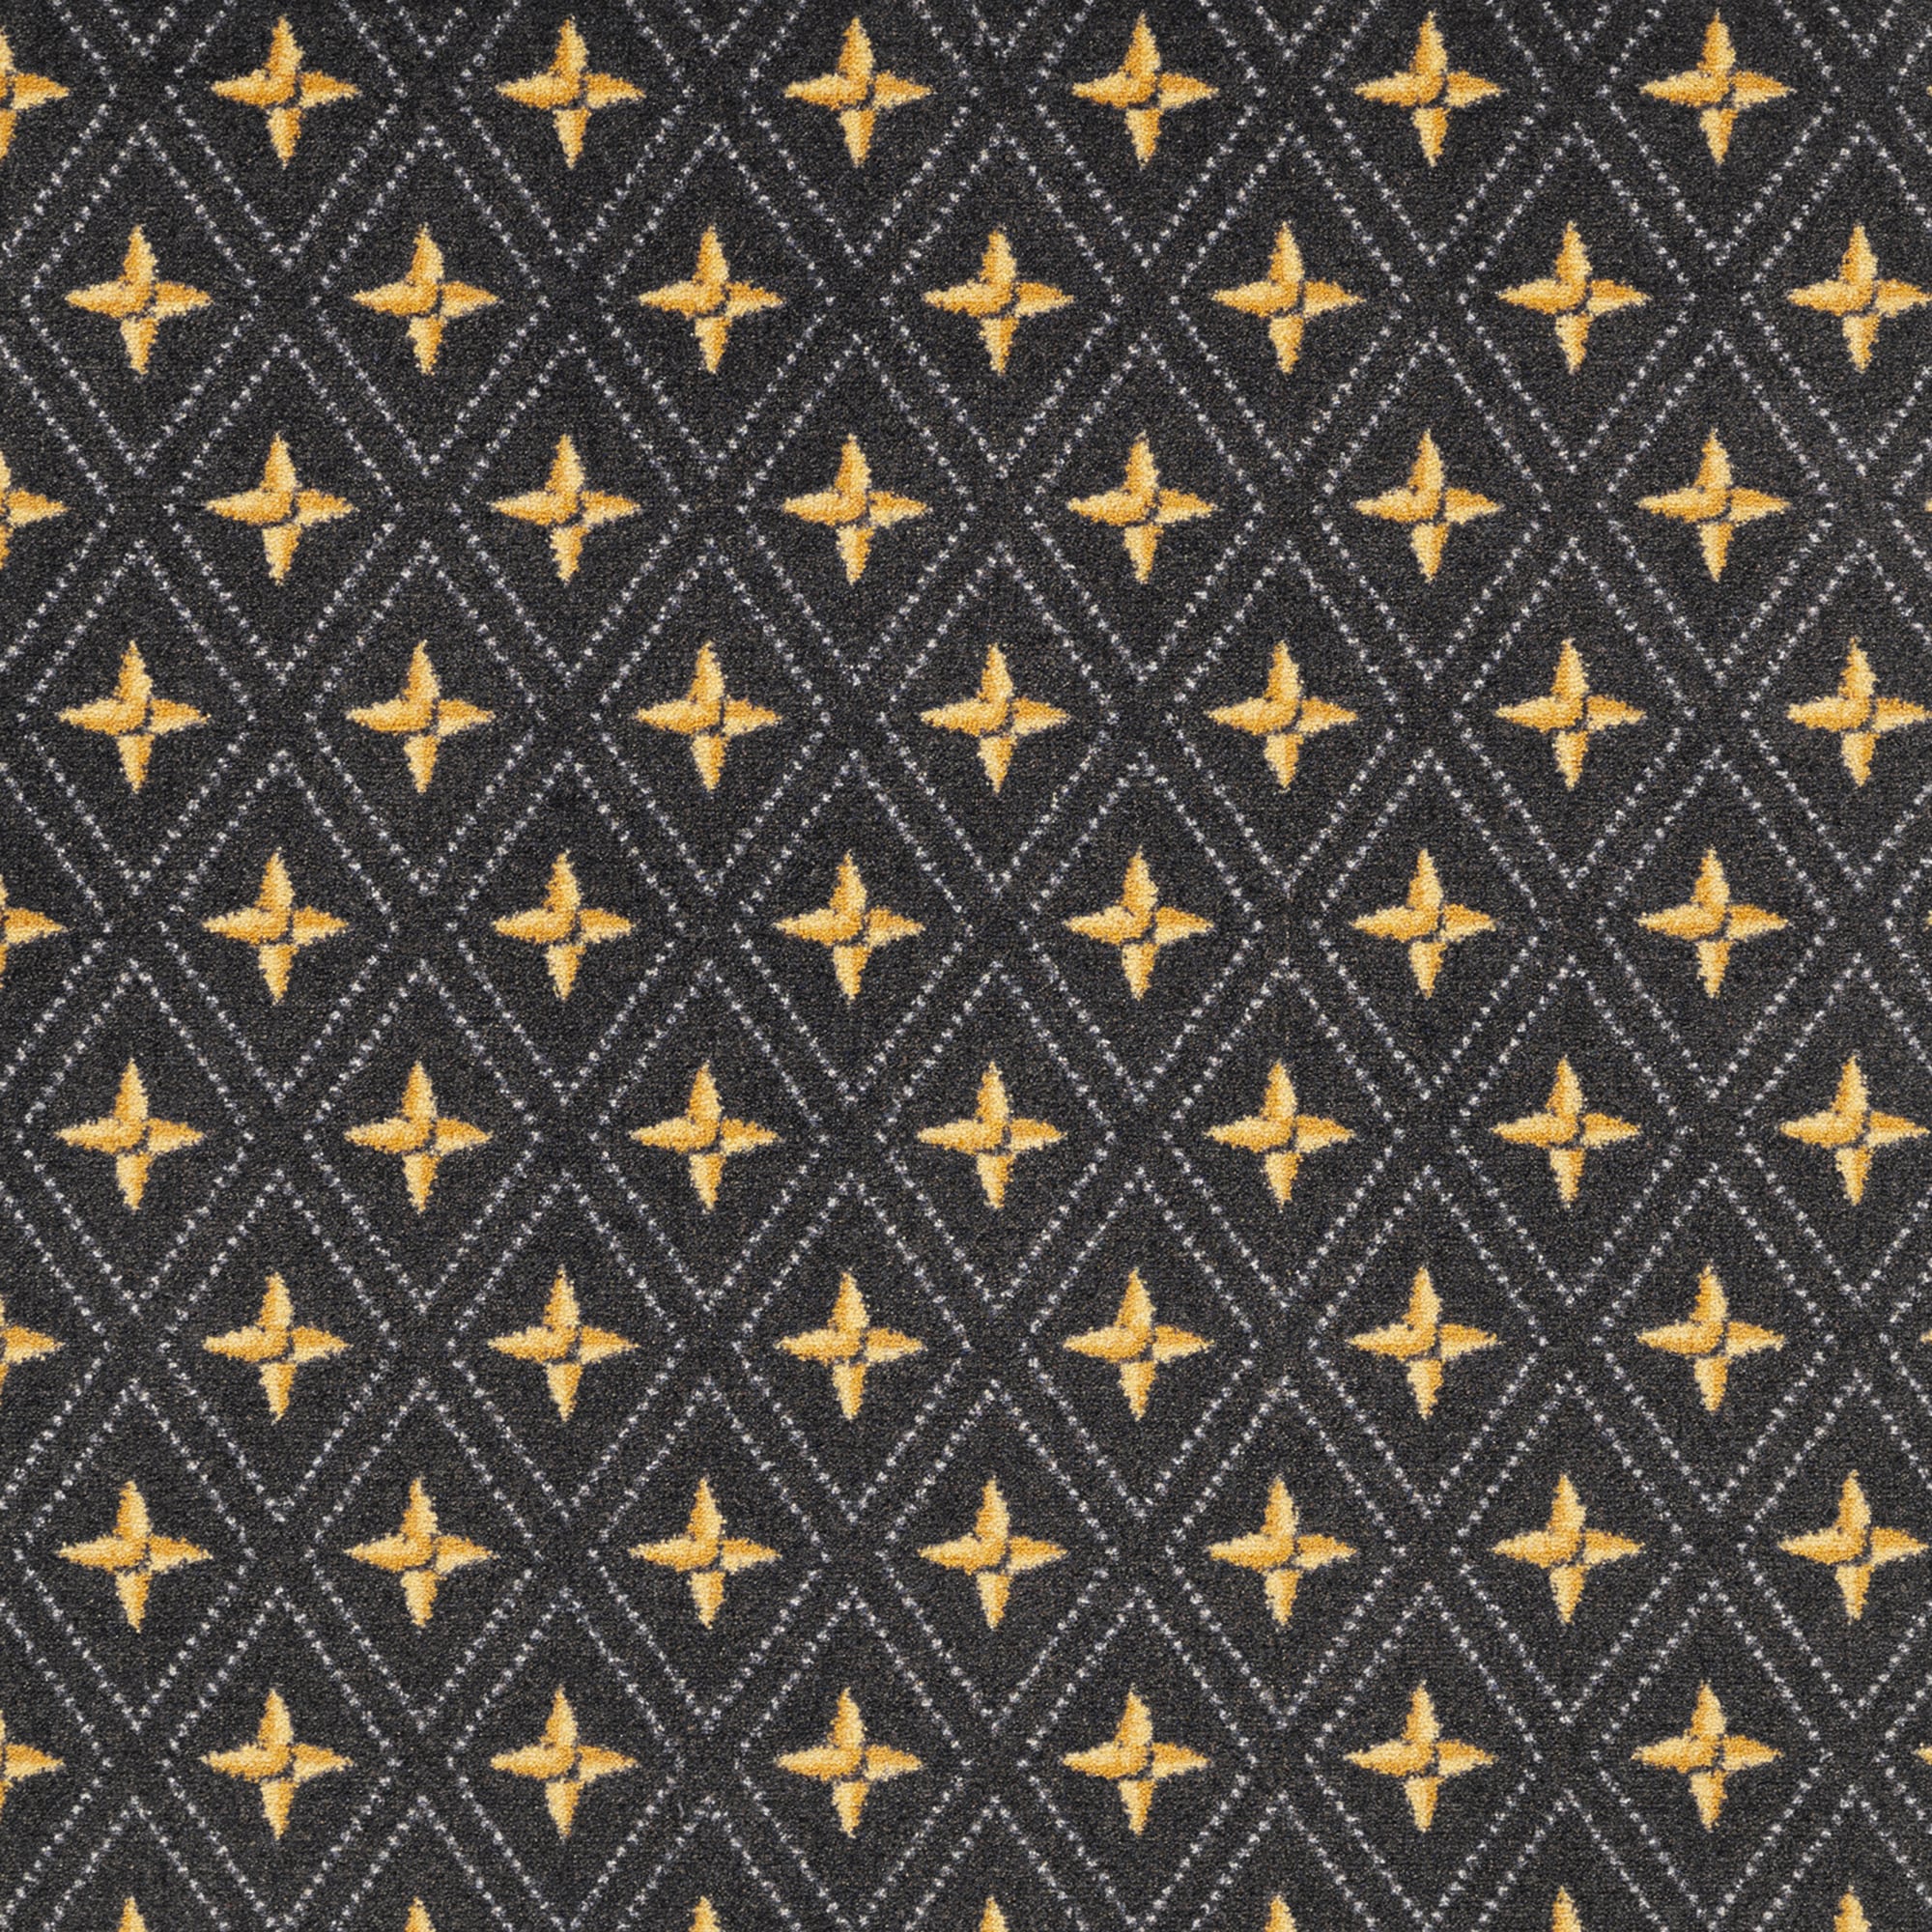 LV Black Vinyl fabric with mini gold Patterns